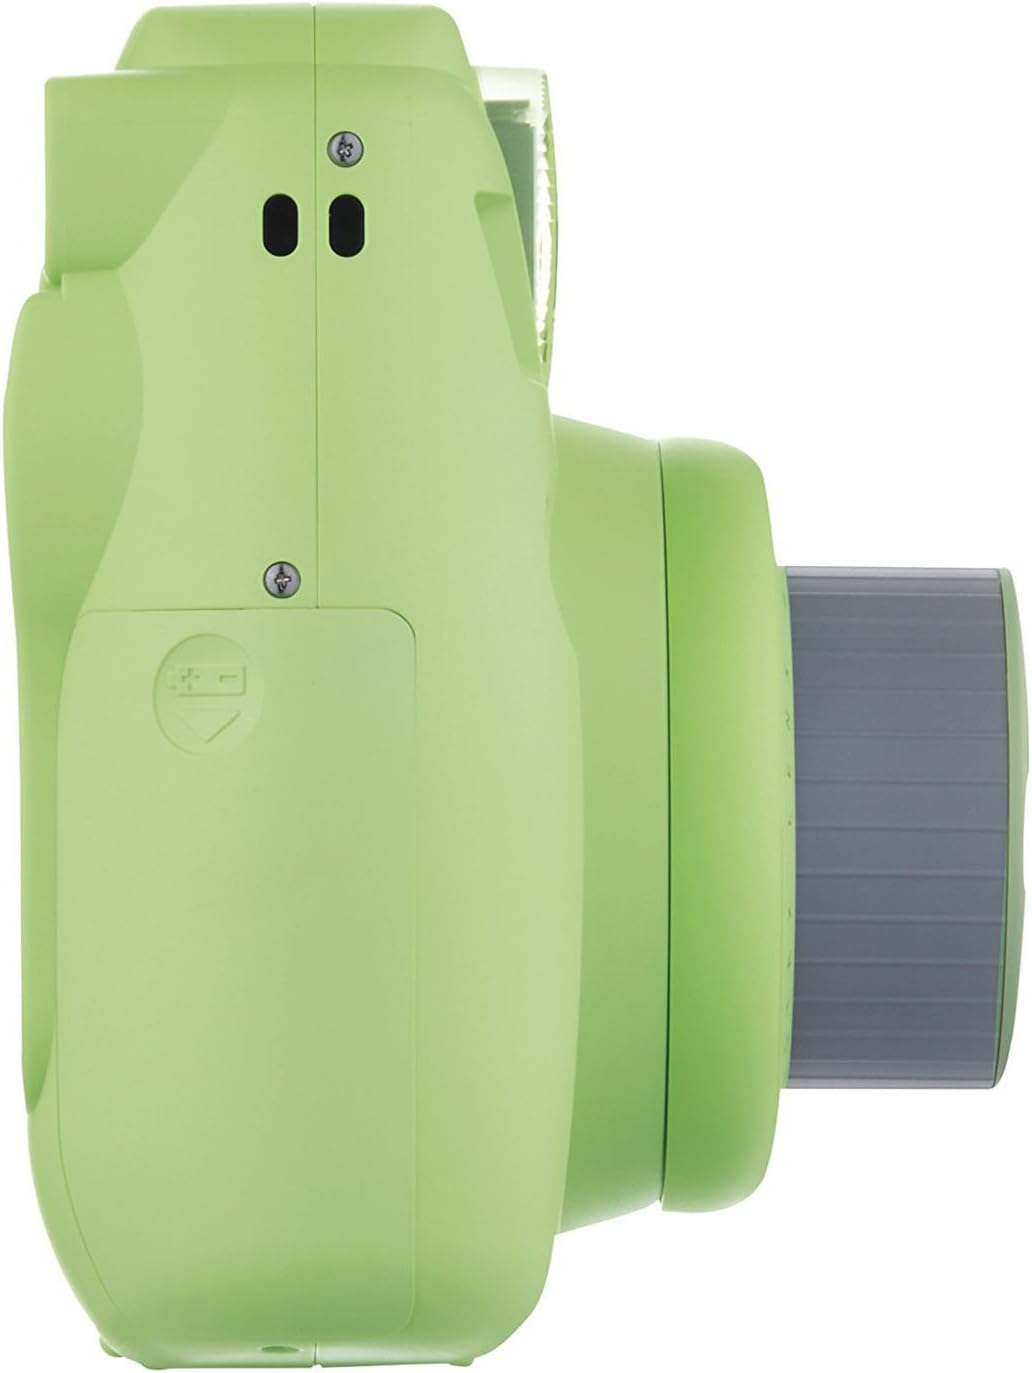 Fujifilm Instax Mini 9 Camera - Lime Green